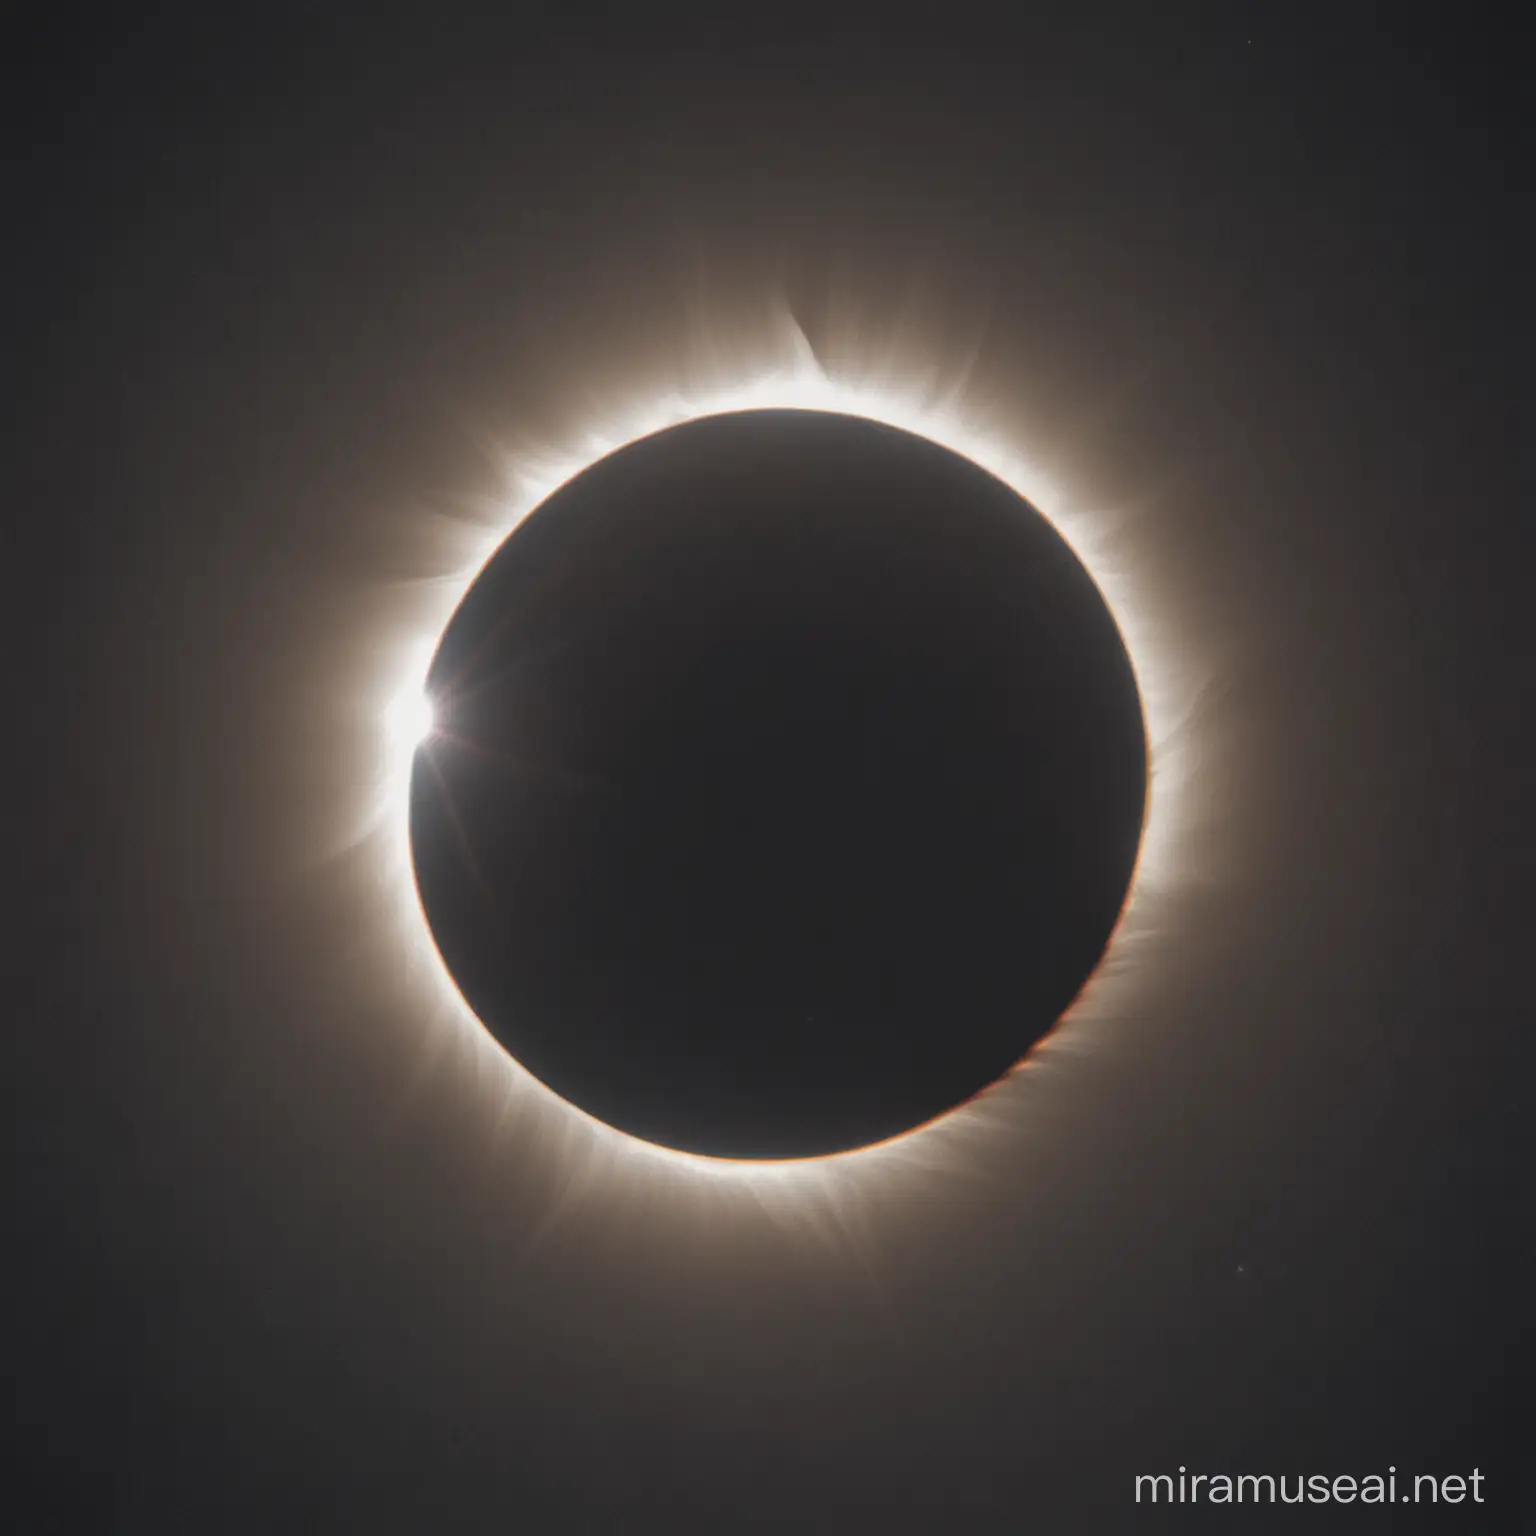 Spectacular Total Solar Eclipse Phenomenon